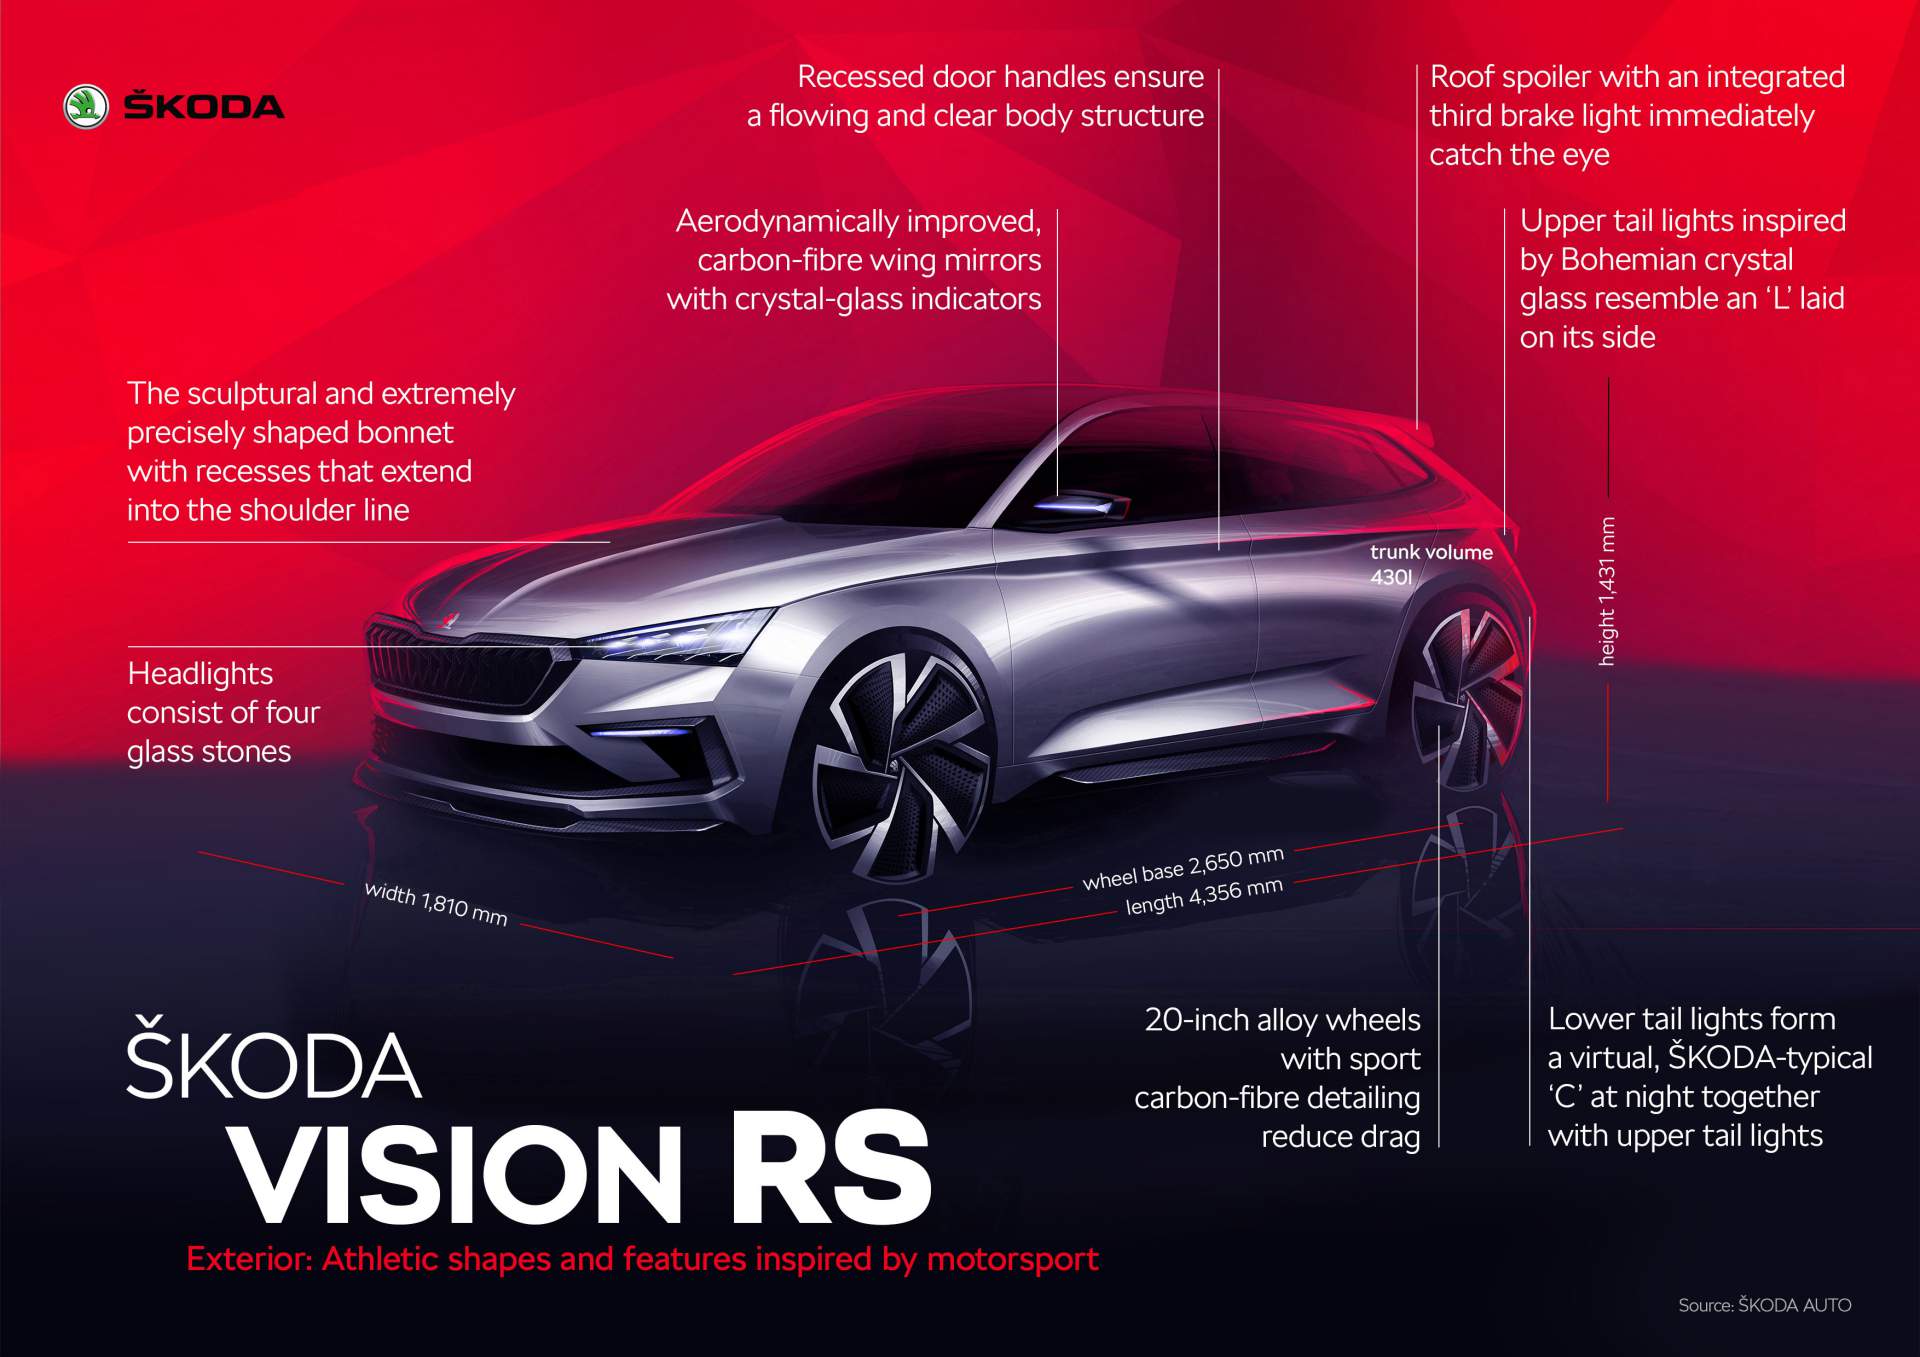 442ddd48-skoda-vision-rs-concept-infographic-1.jpg